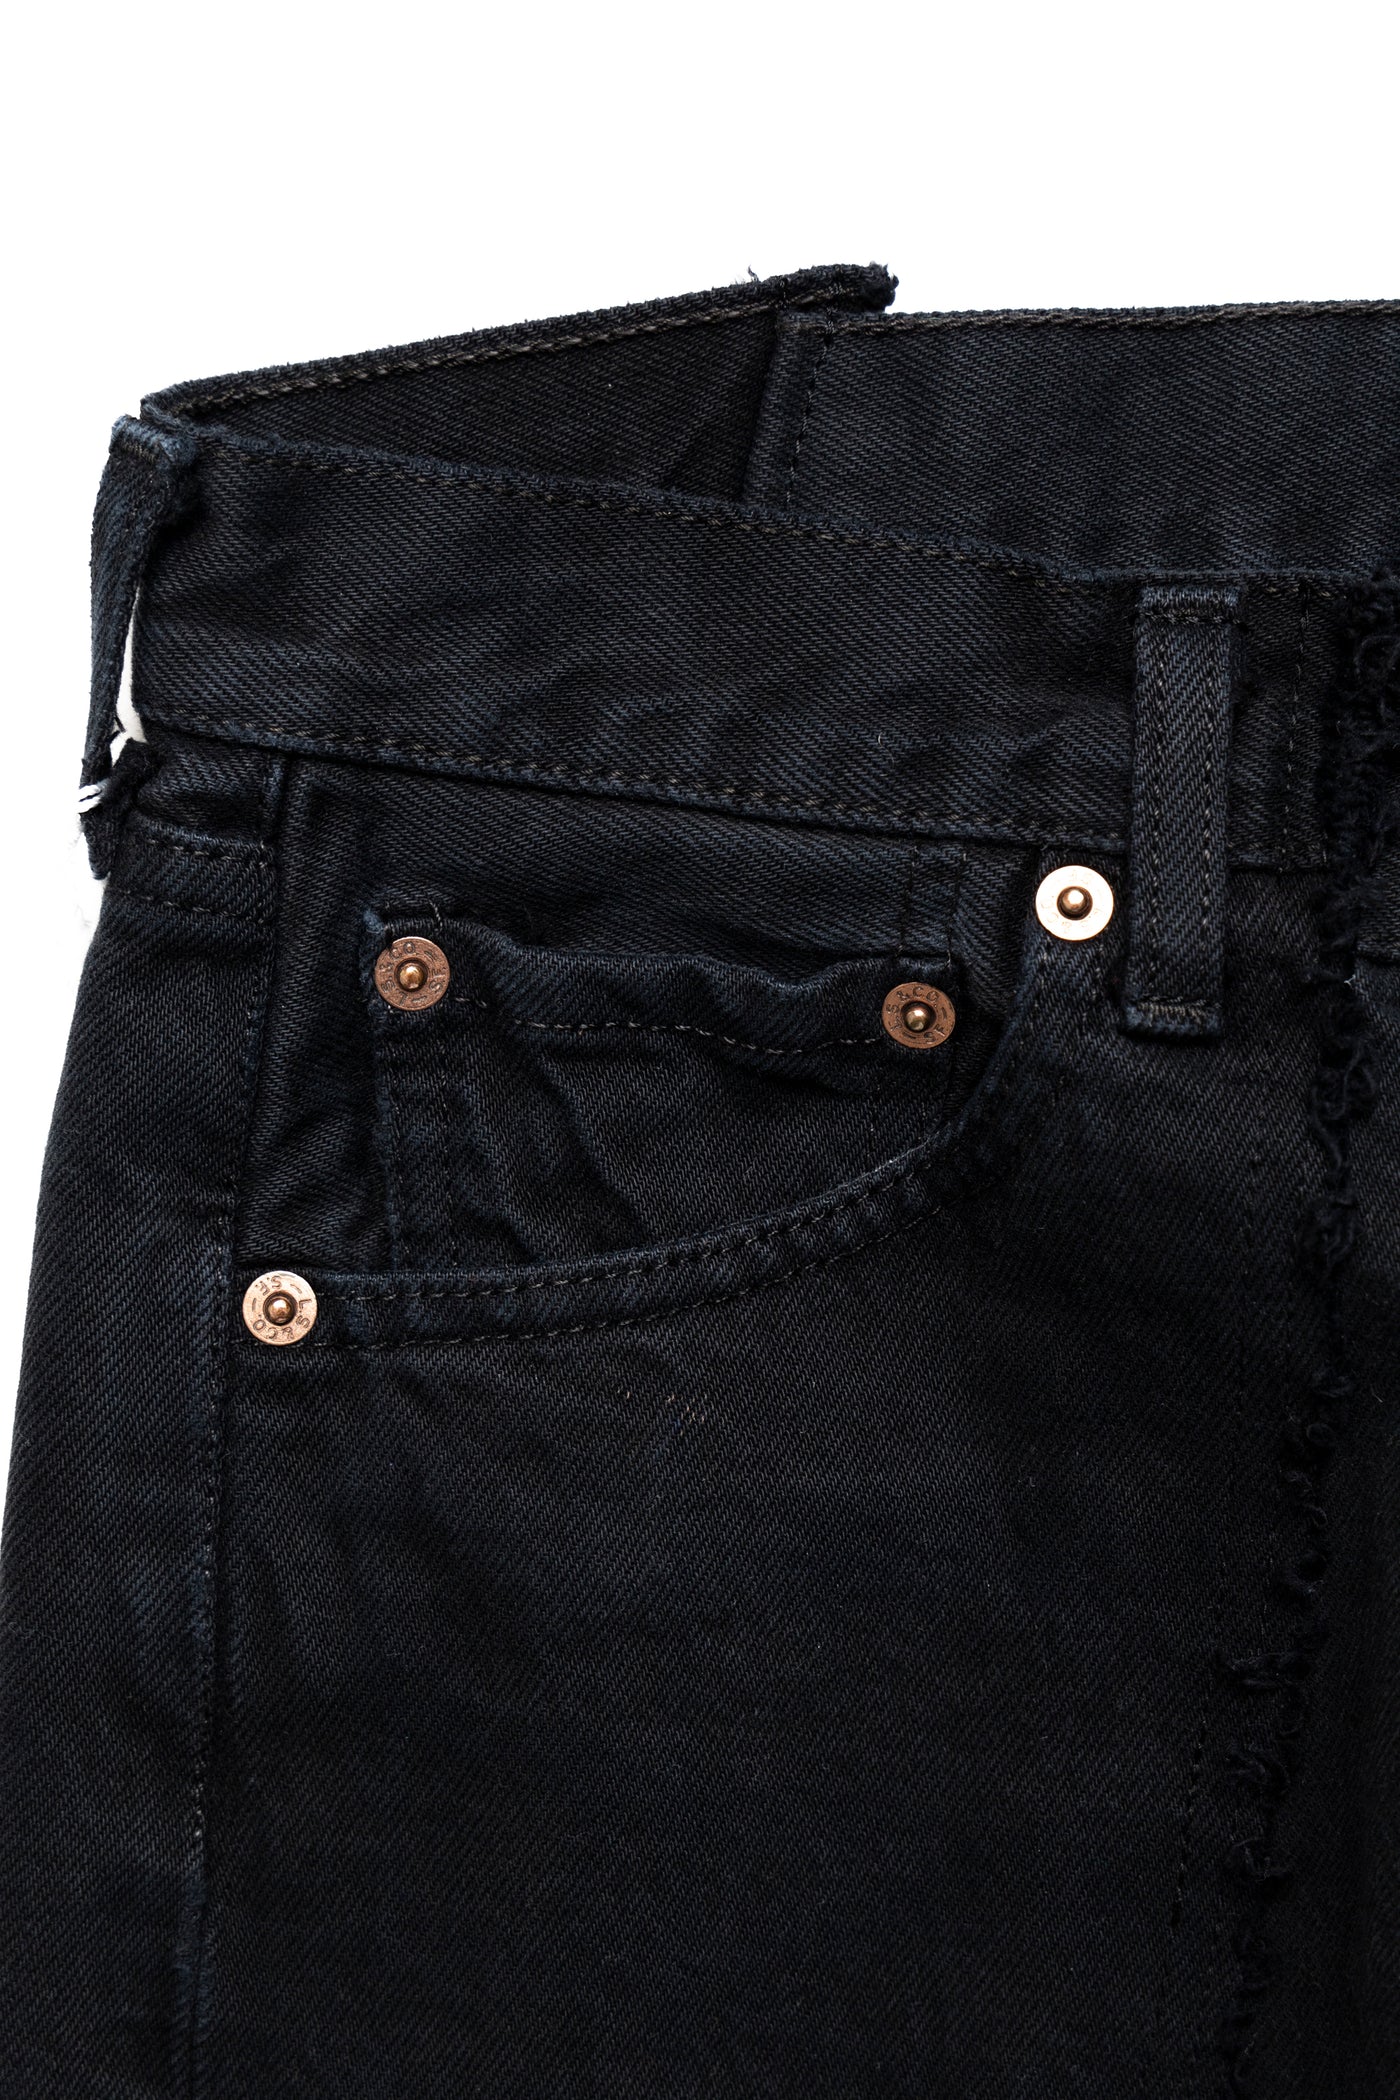 W Pocket Flare Jeans Black - S (1)